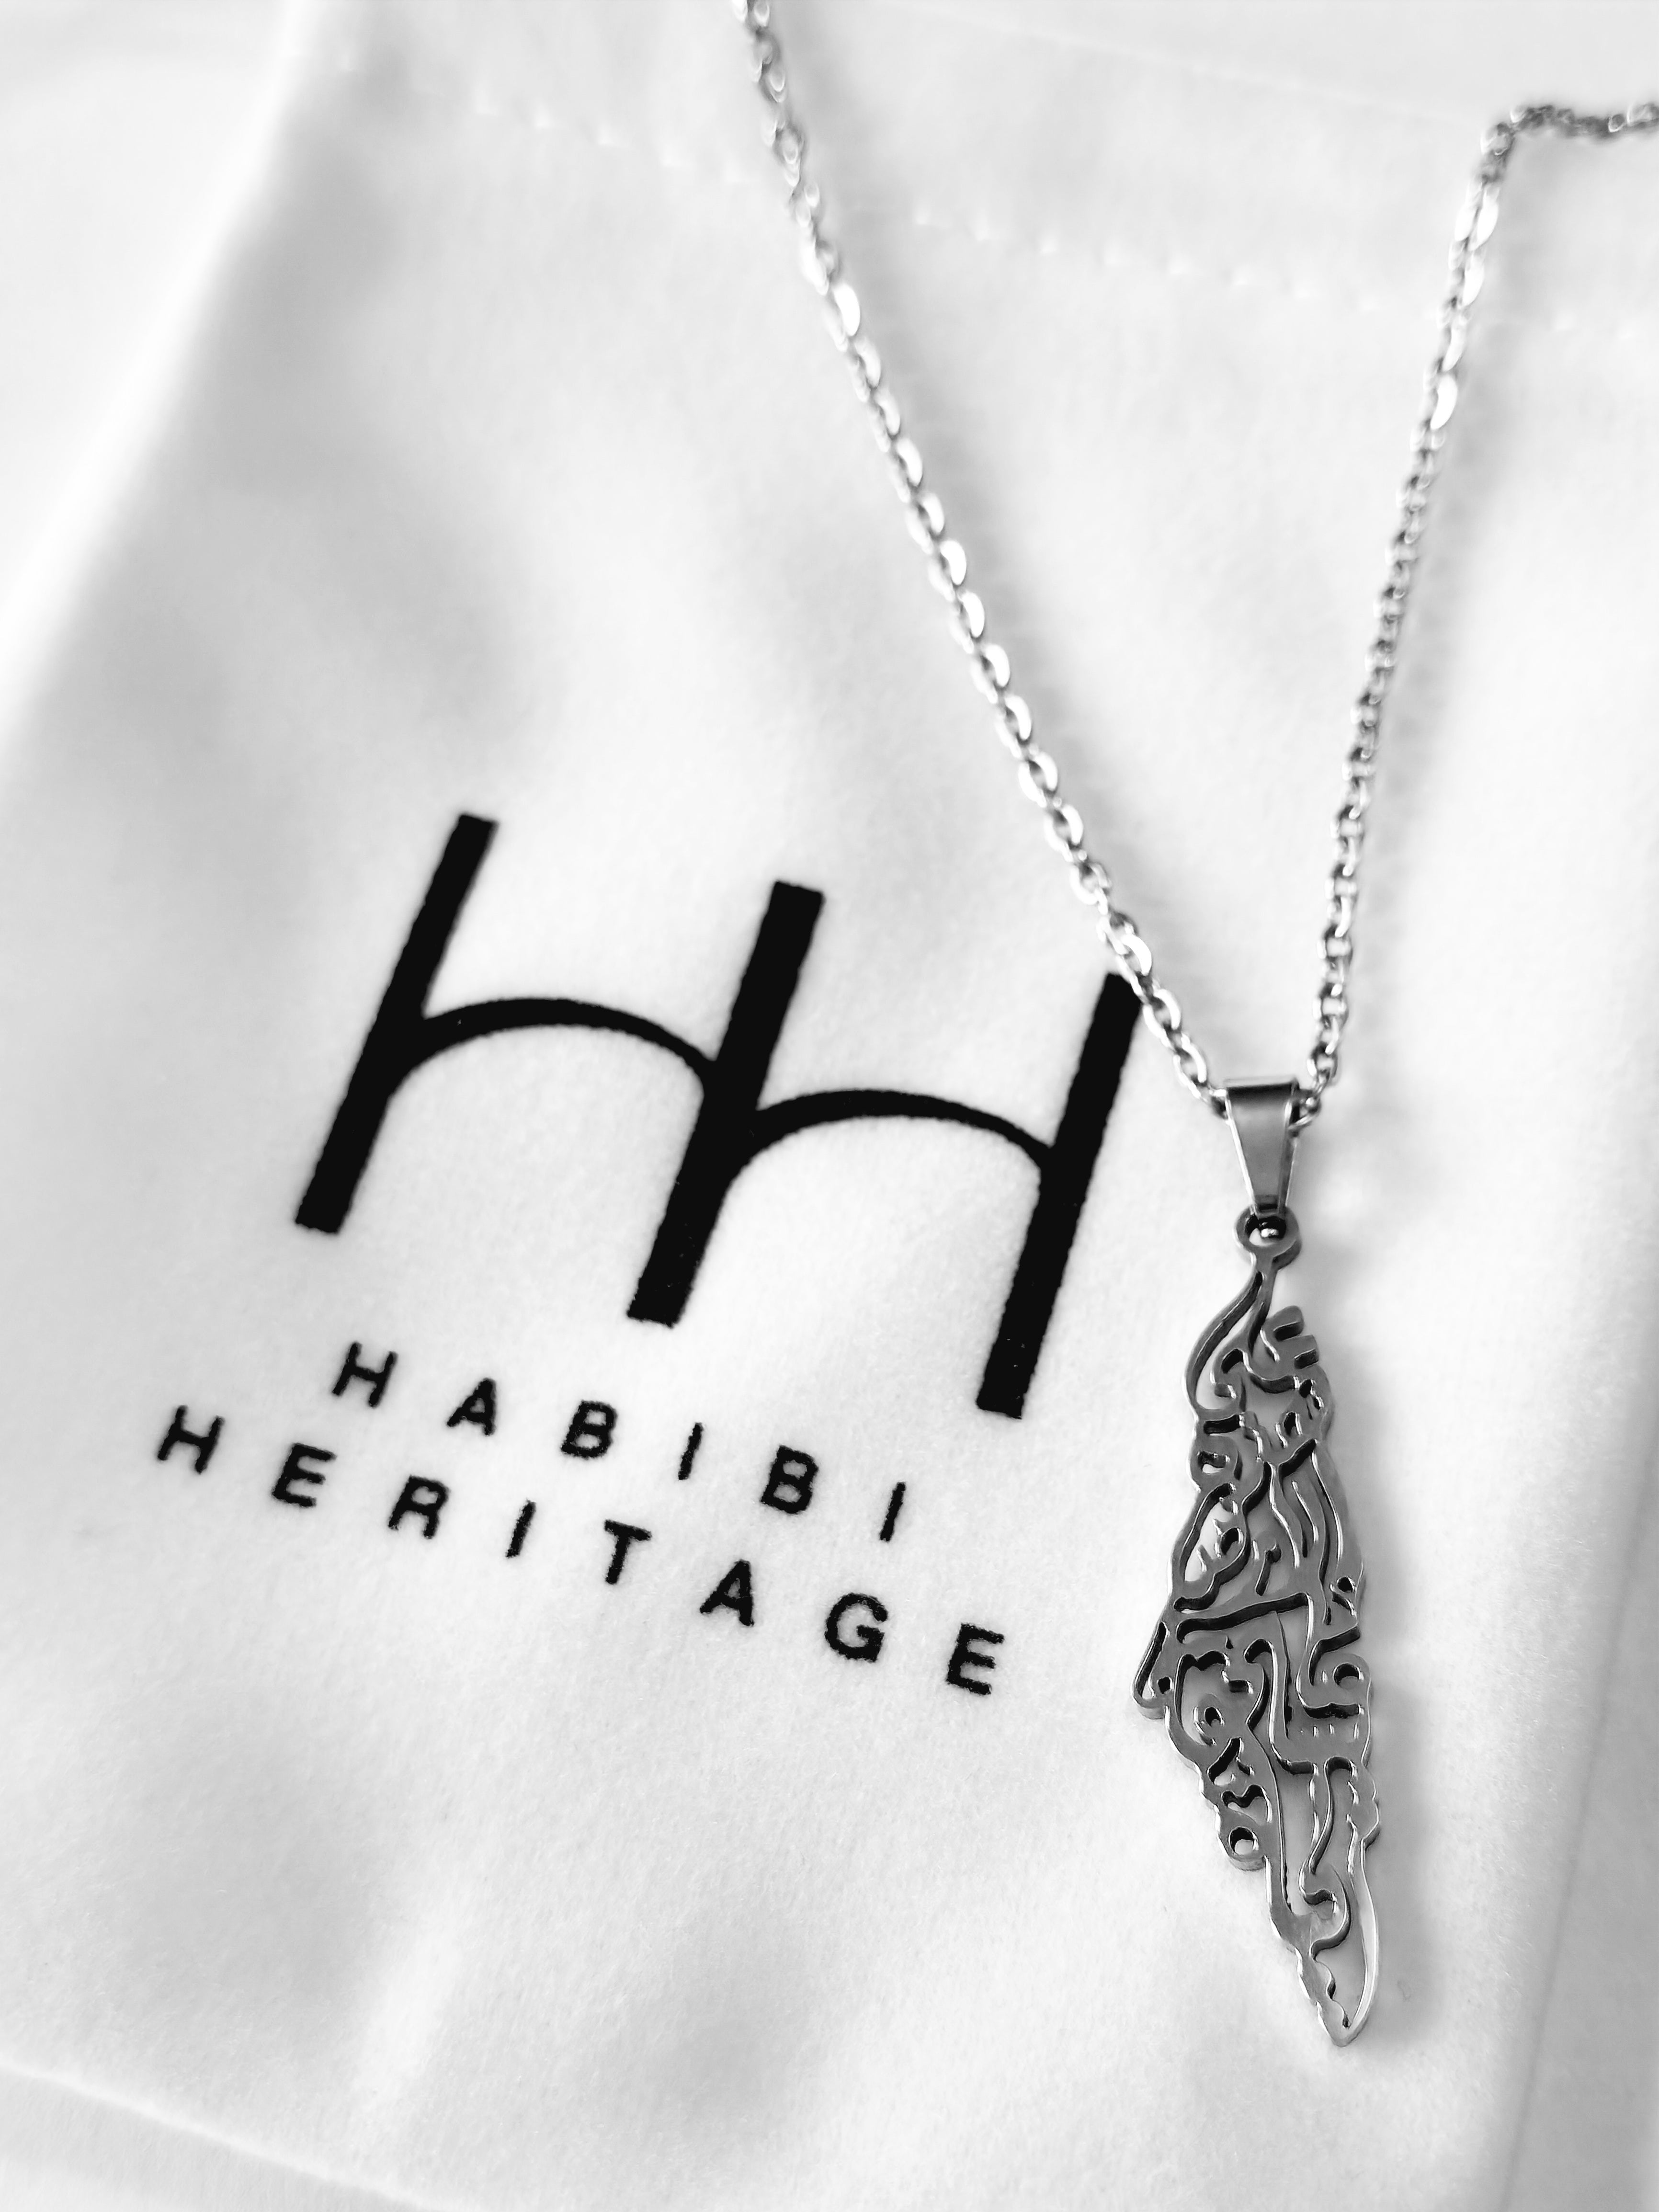 Palestine Necklace - Palestinian Land Necklace - Habibi Heritage